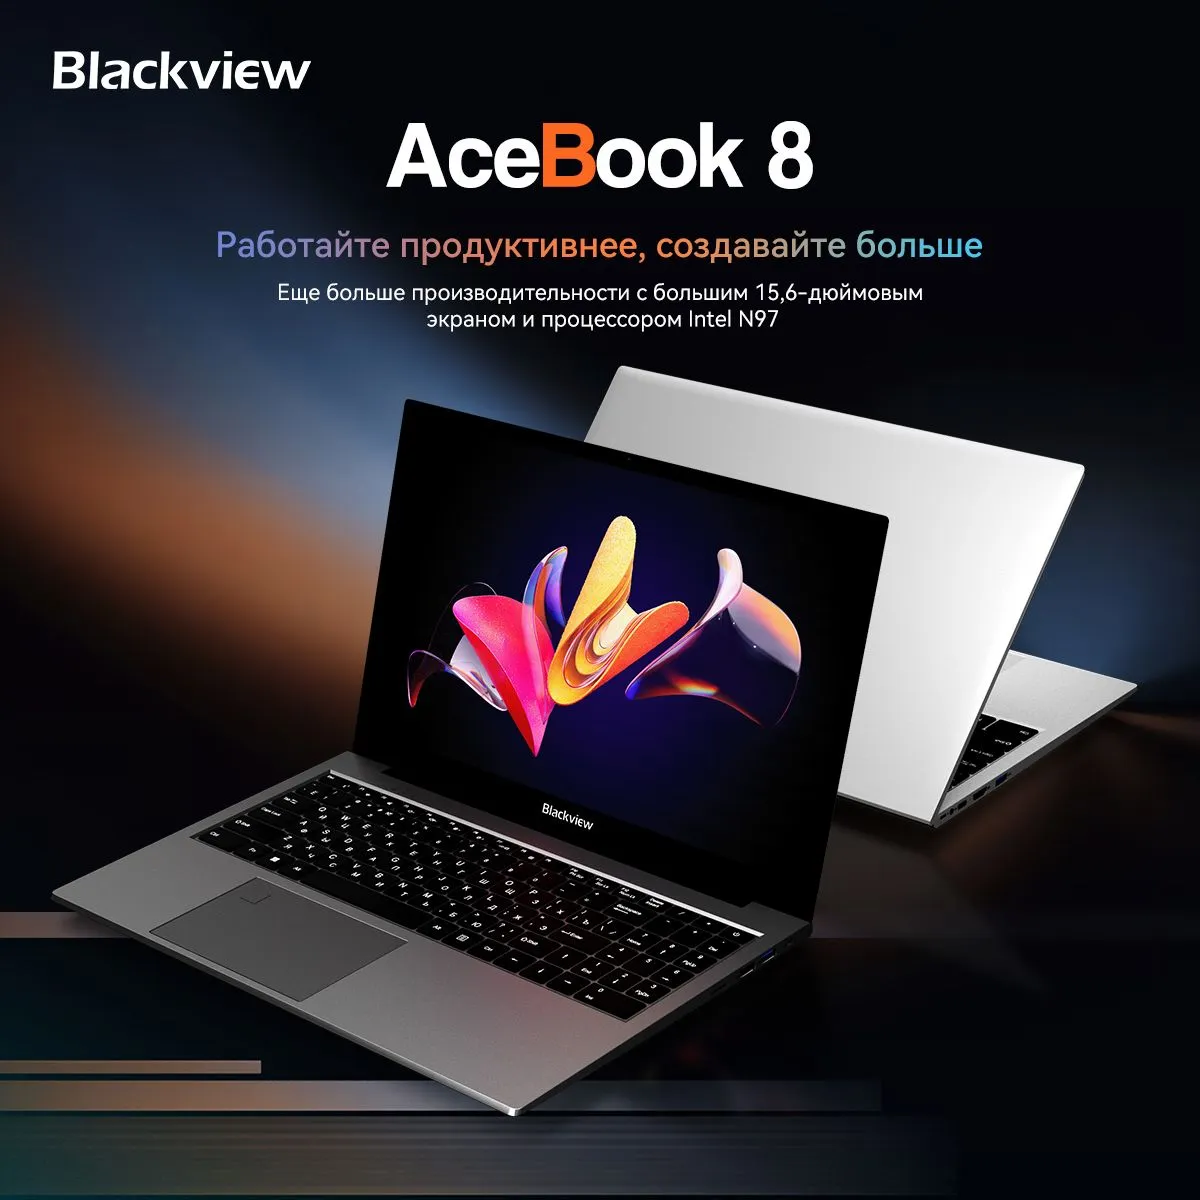 Blackview AceBook 8       Ozon